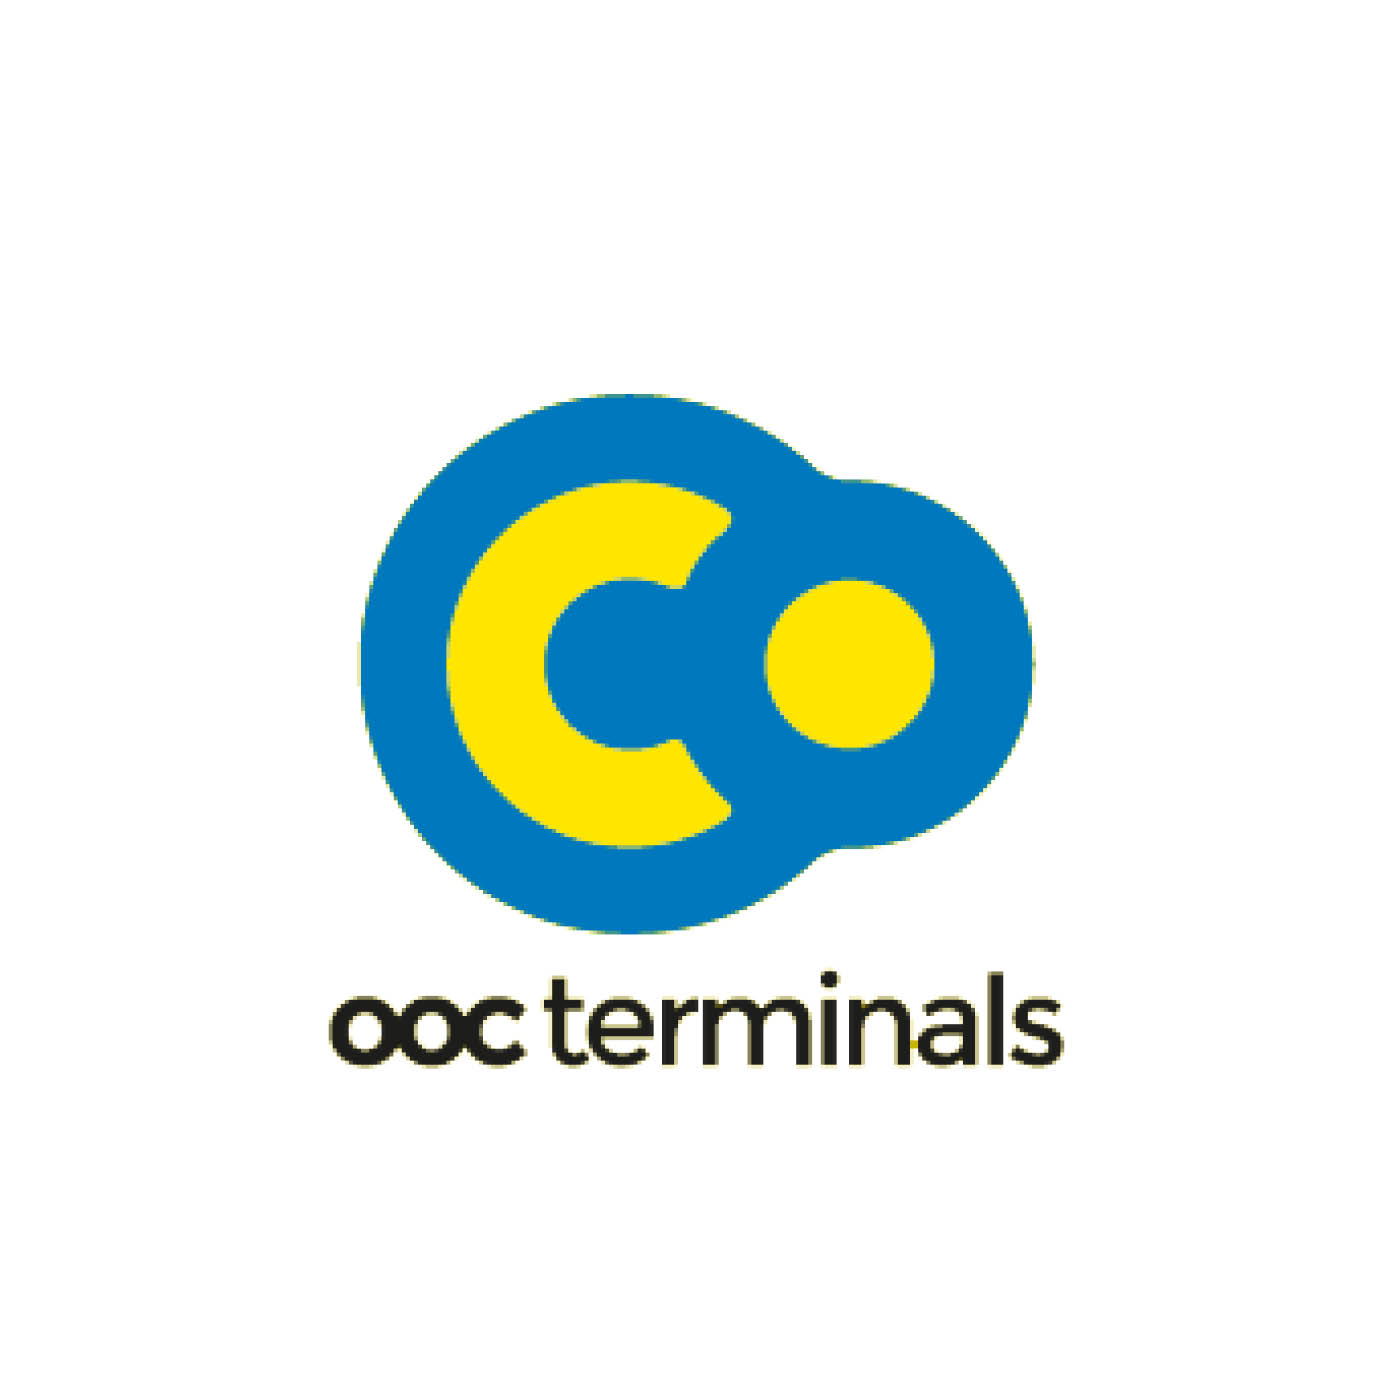 Logo OOC terminals BV